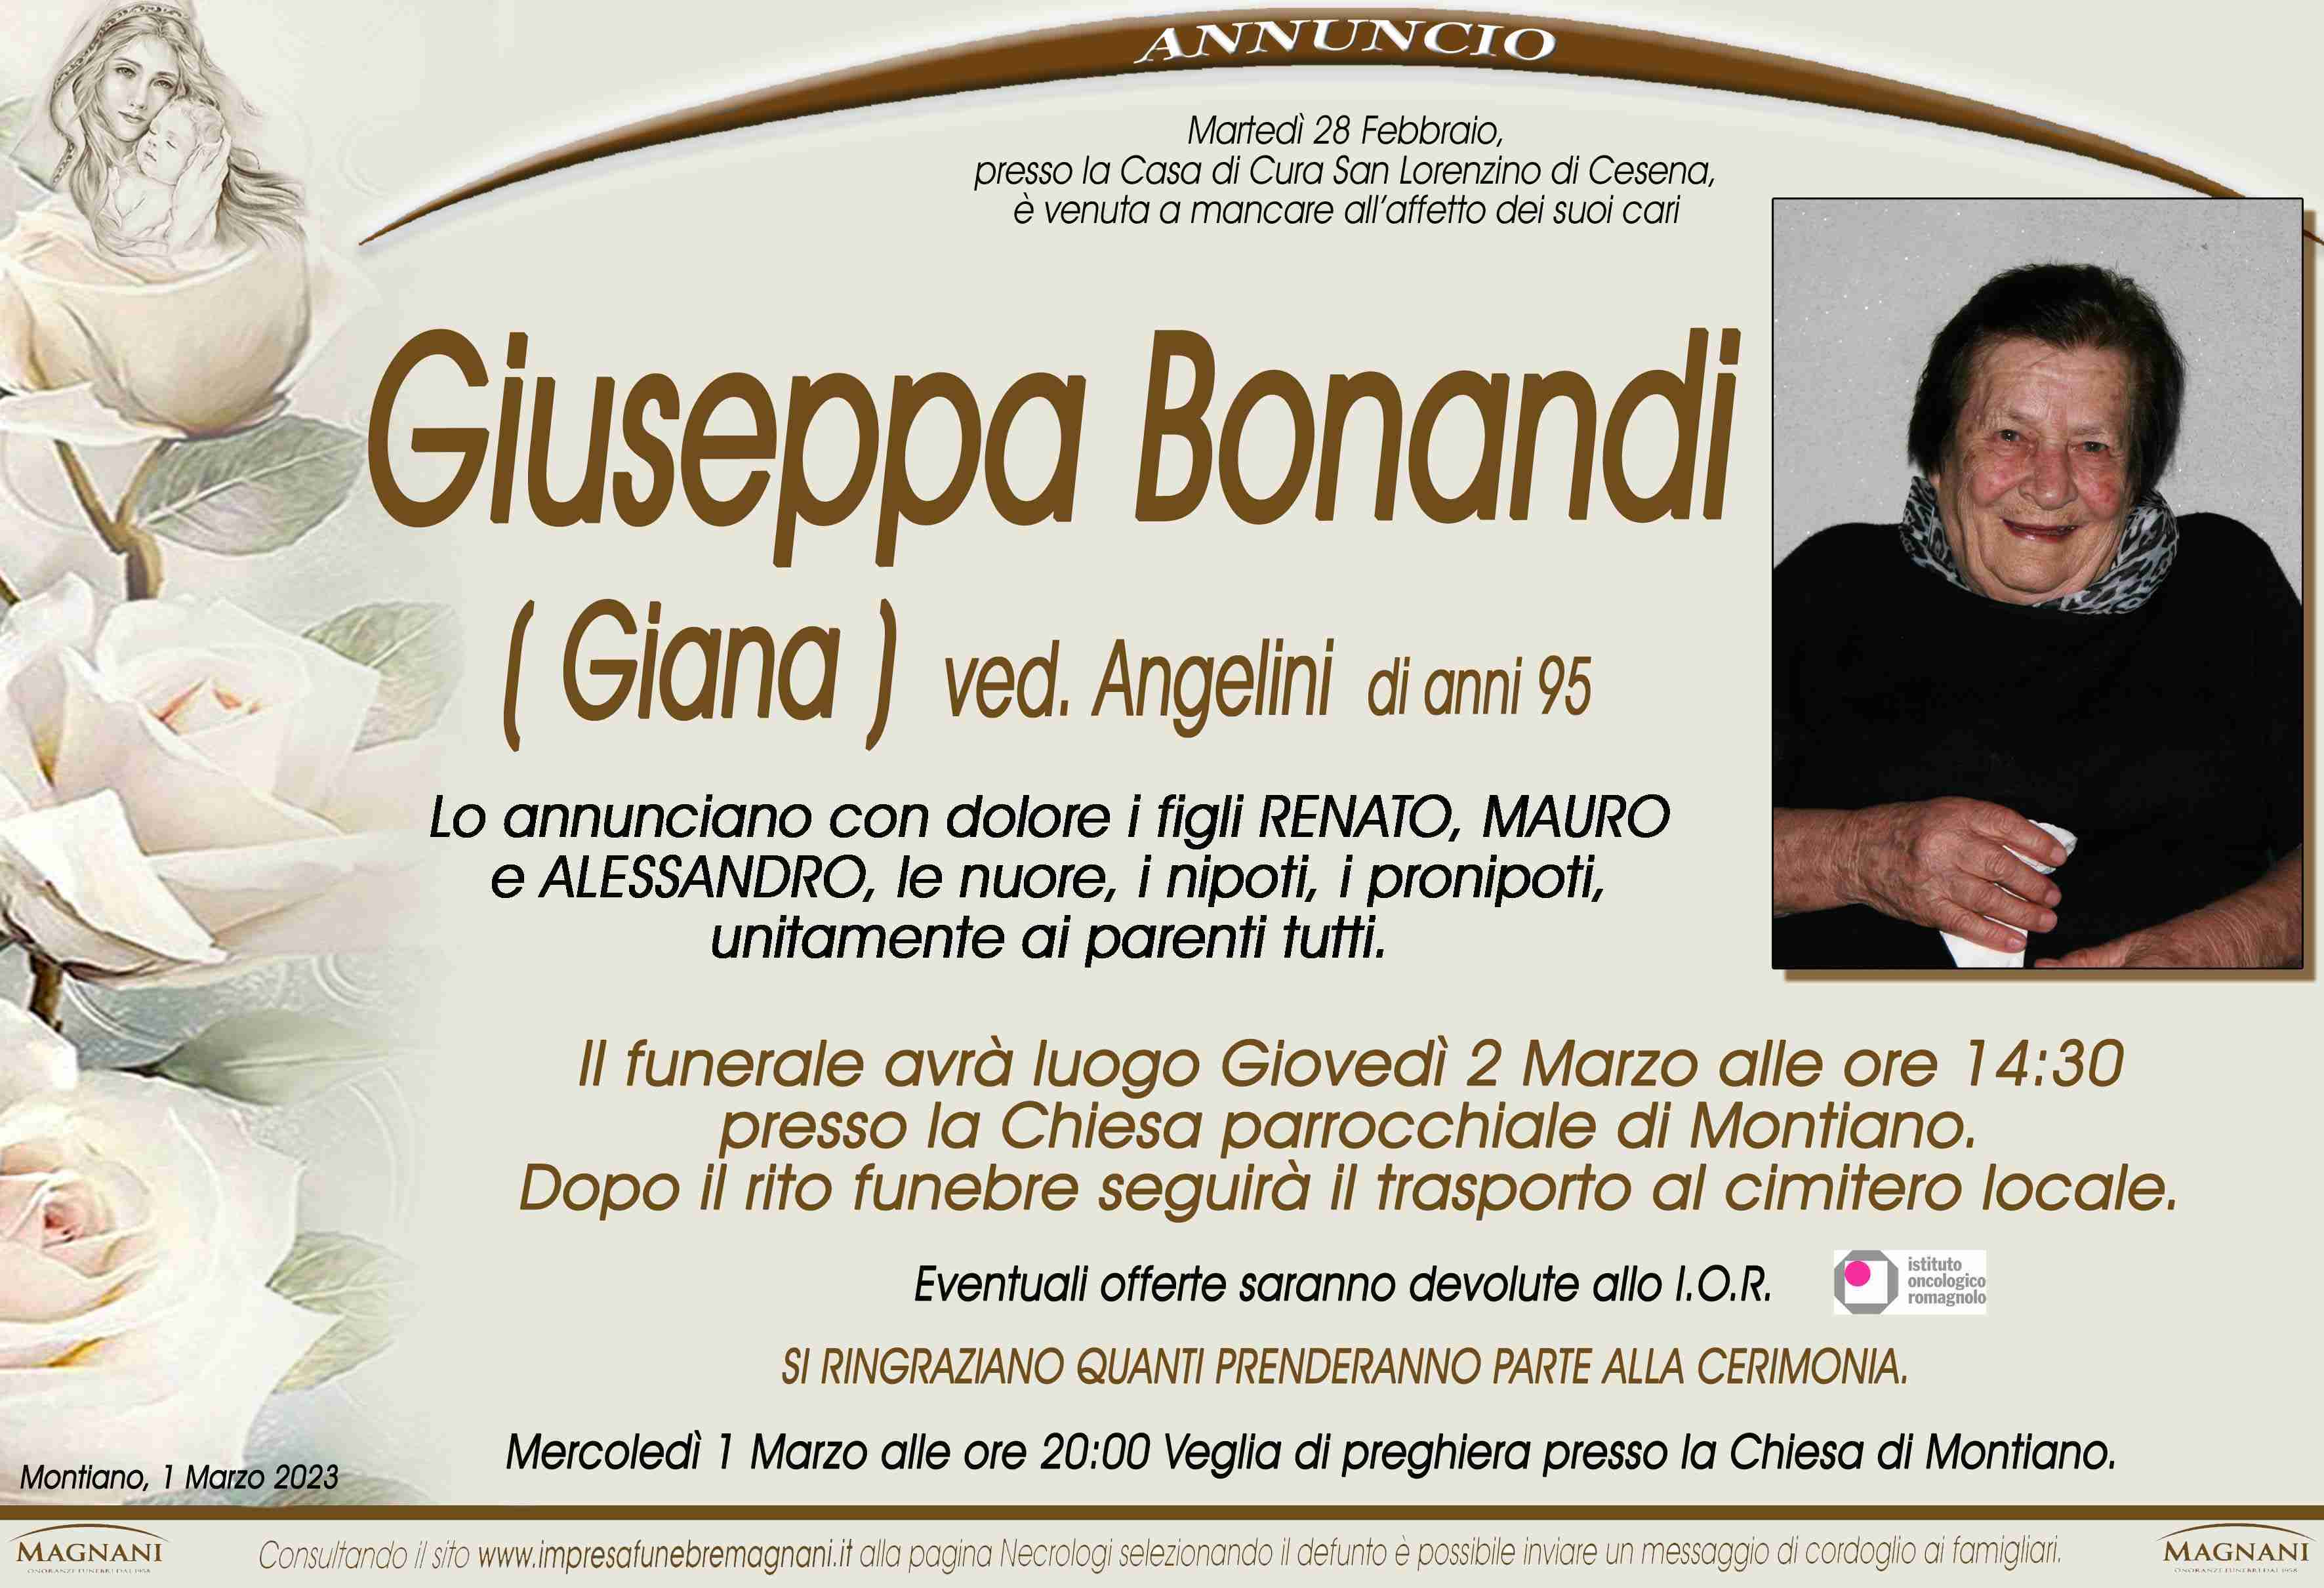 Giuseppa Bonandi